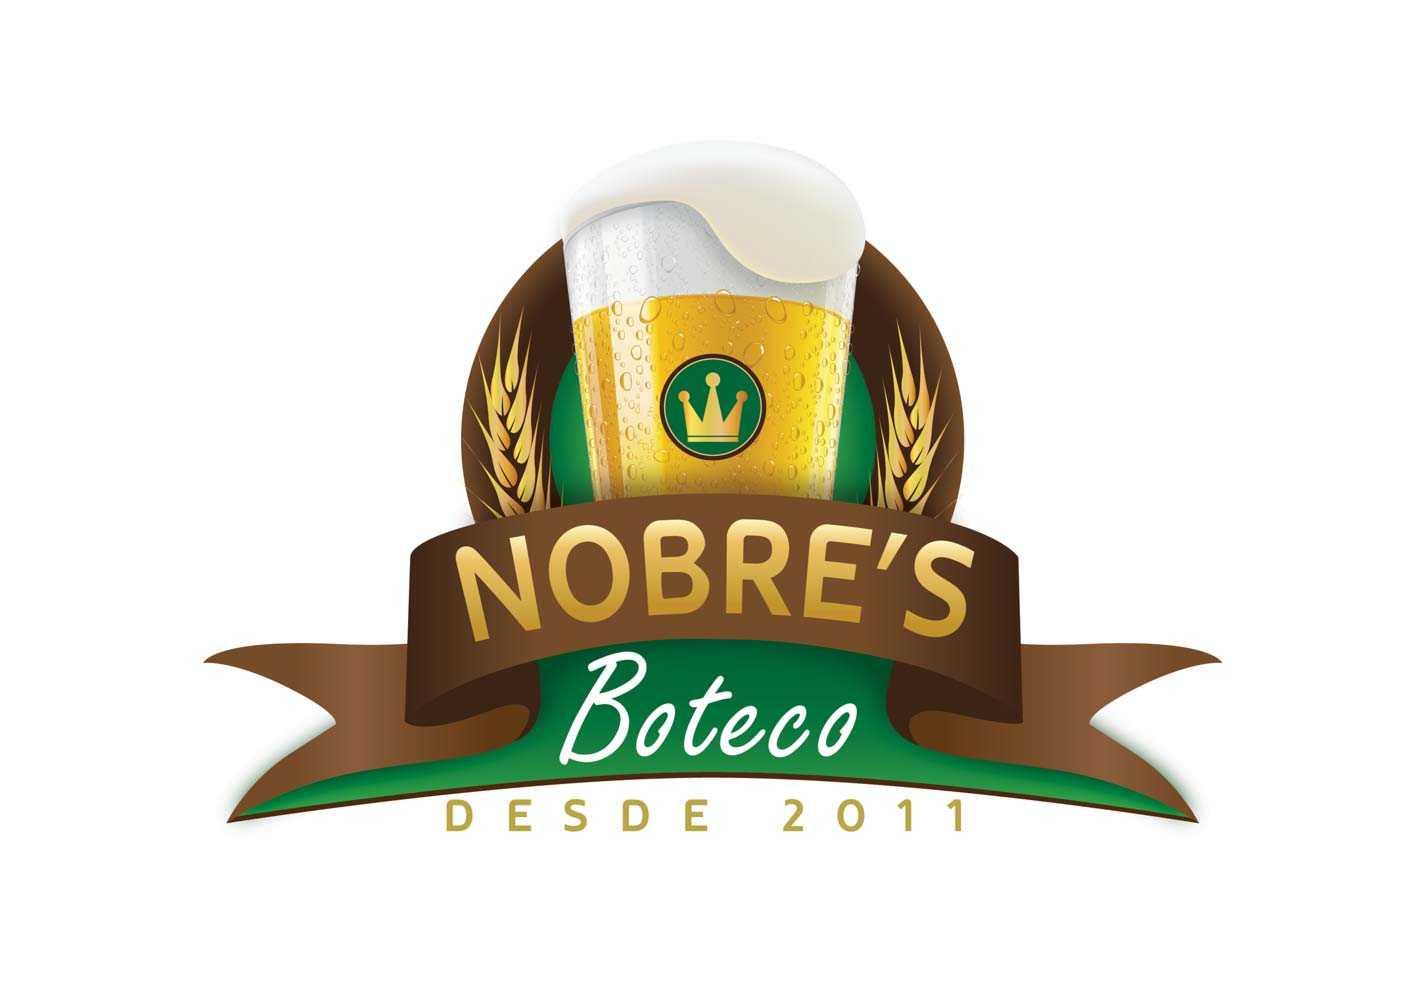 Brand | Nobre’s Boteco